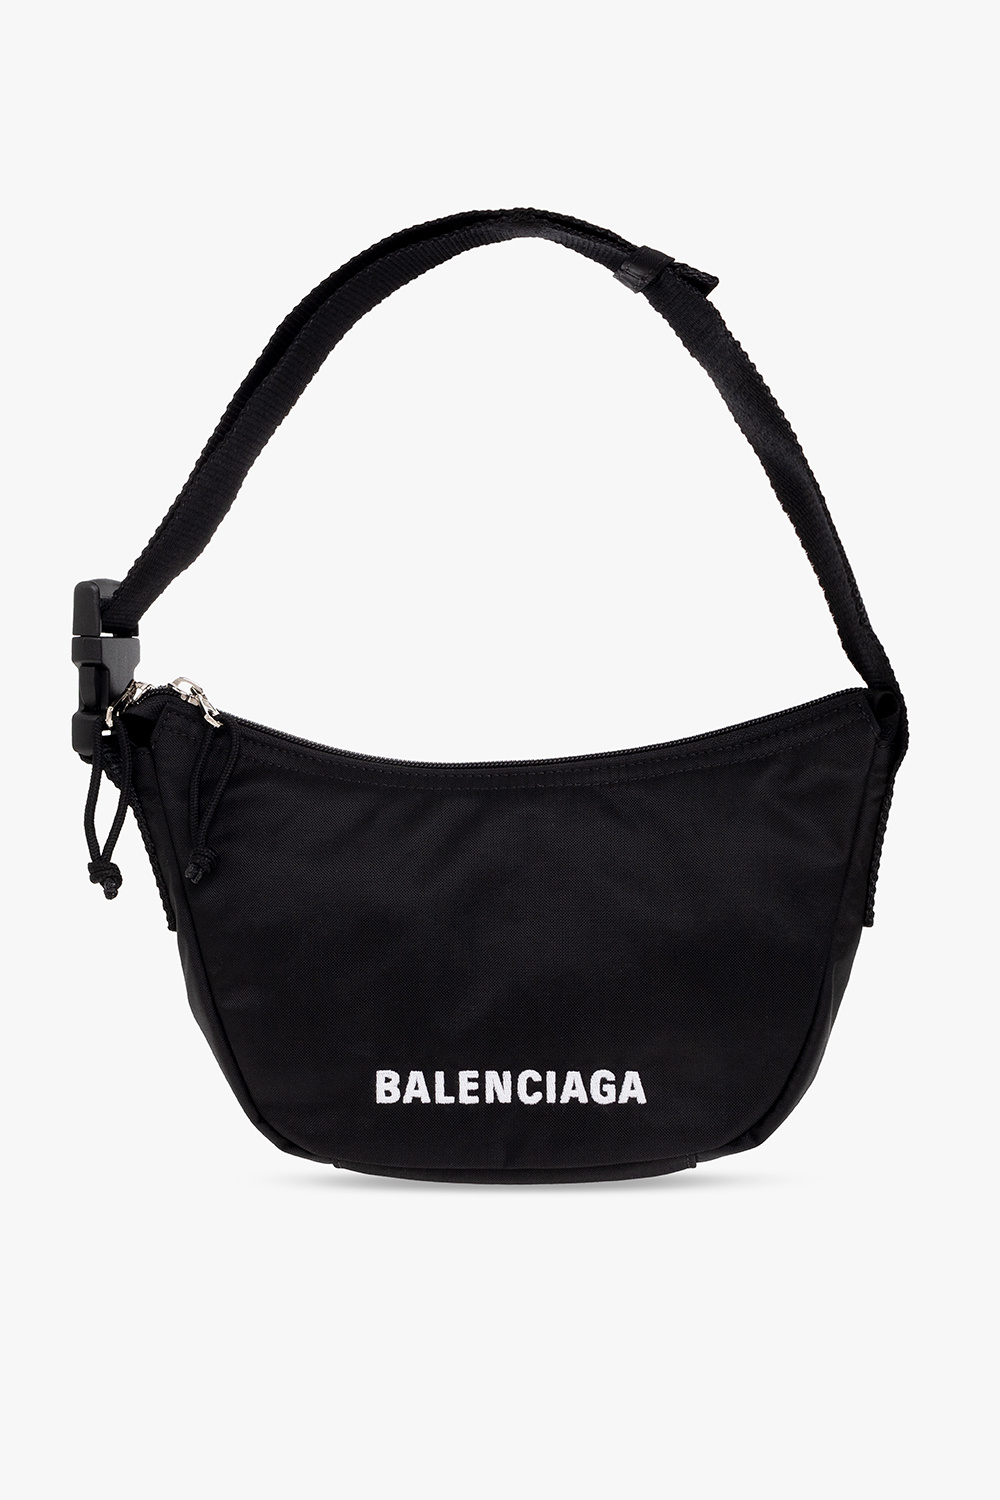 Balenciaga Wheel Sling Bag in Black